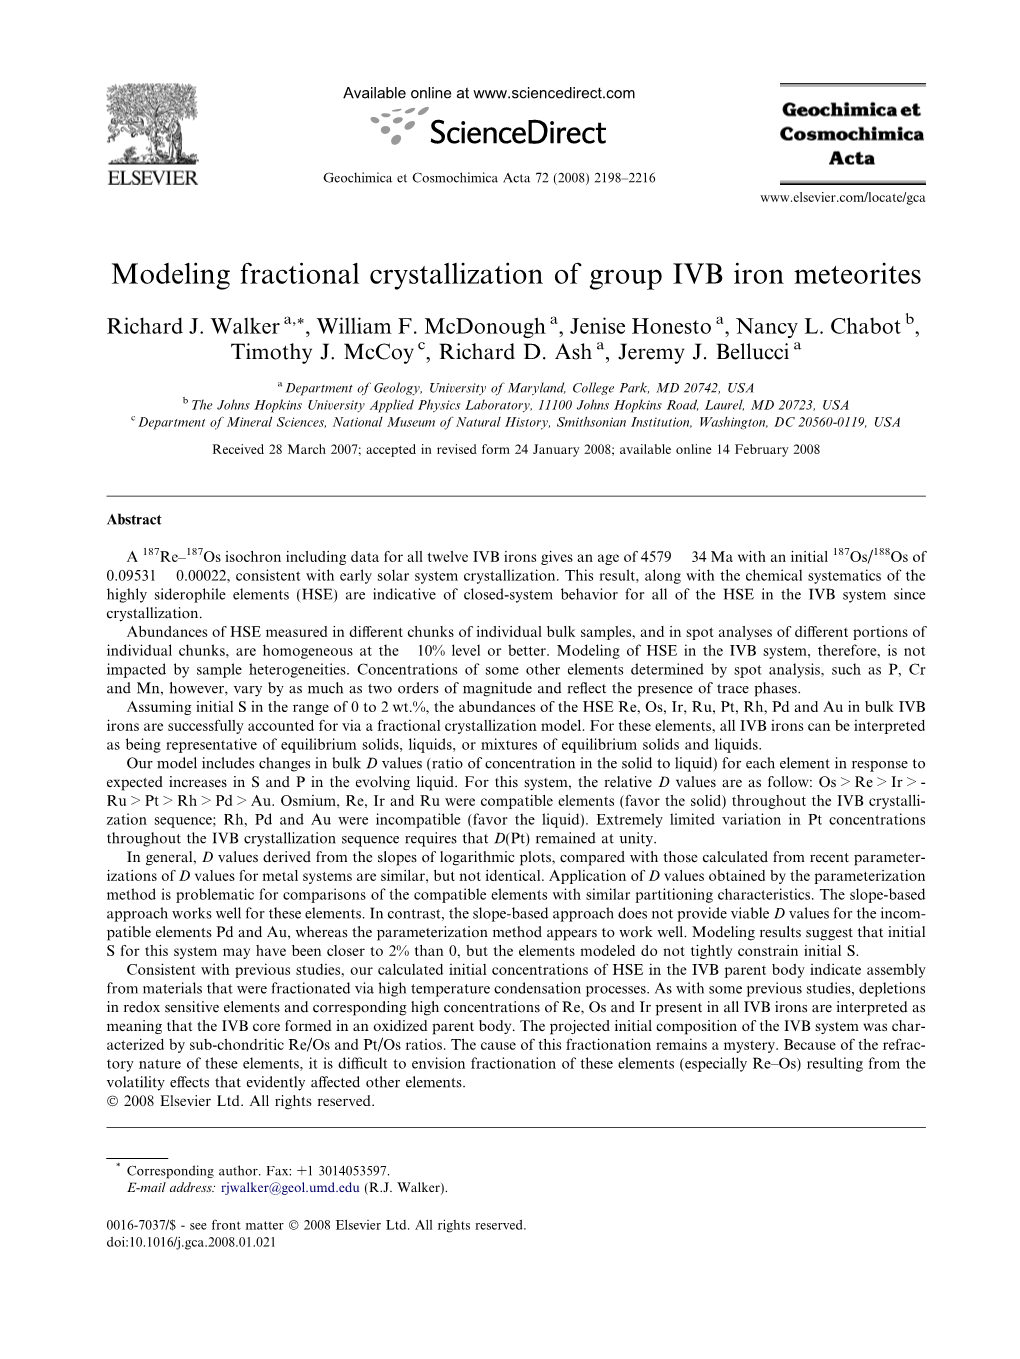 Modeling Fractional Crystallization of Group IVB Iron Meteorites